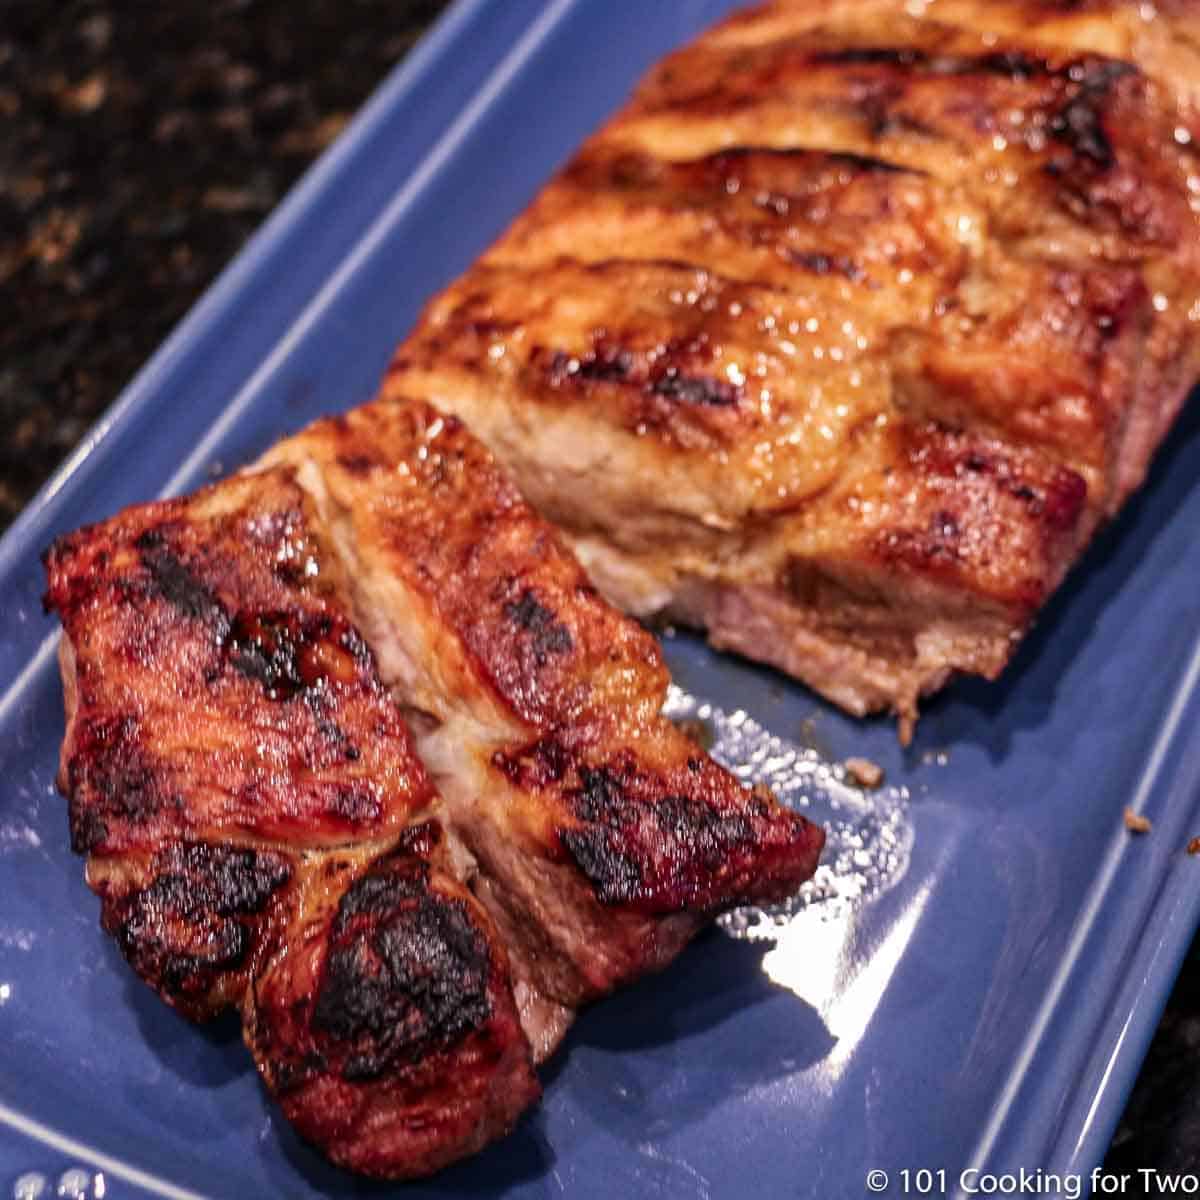 grilled boneless ribs on blue plate cut